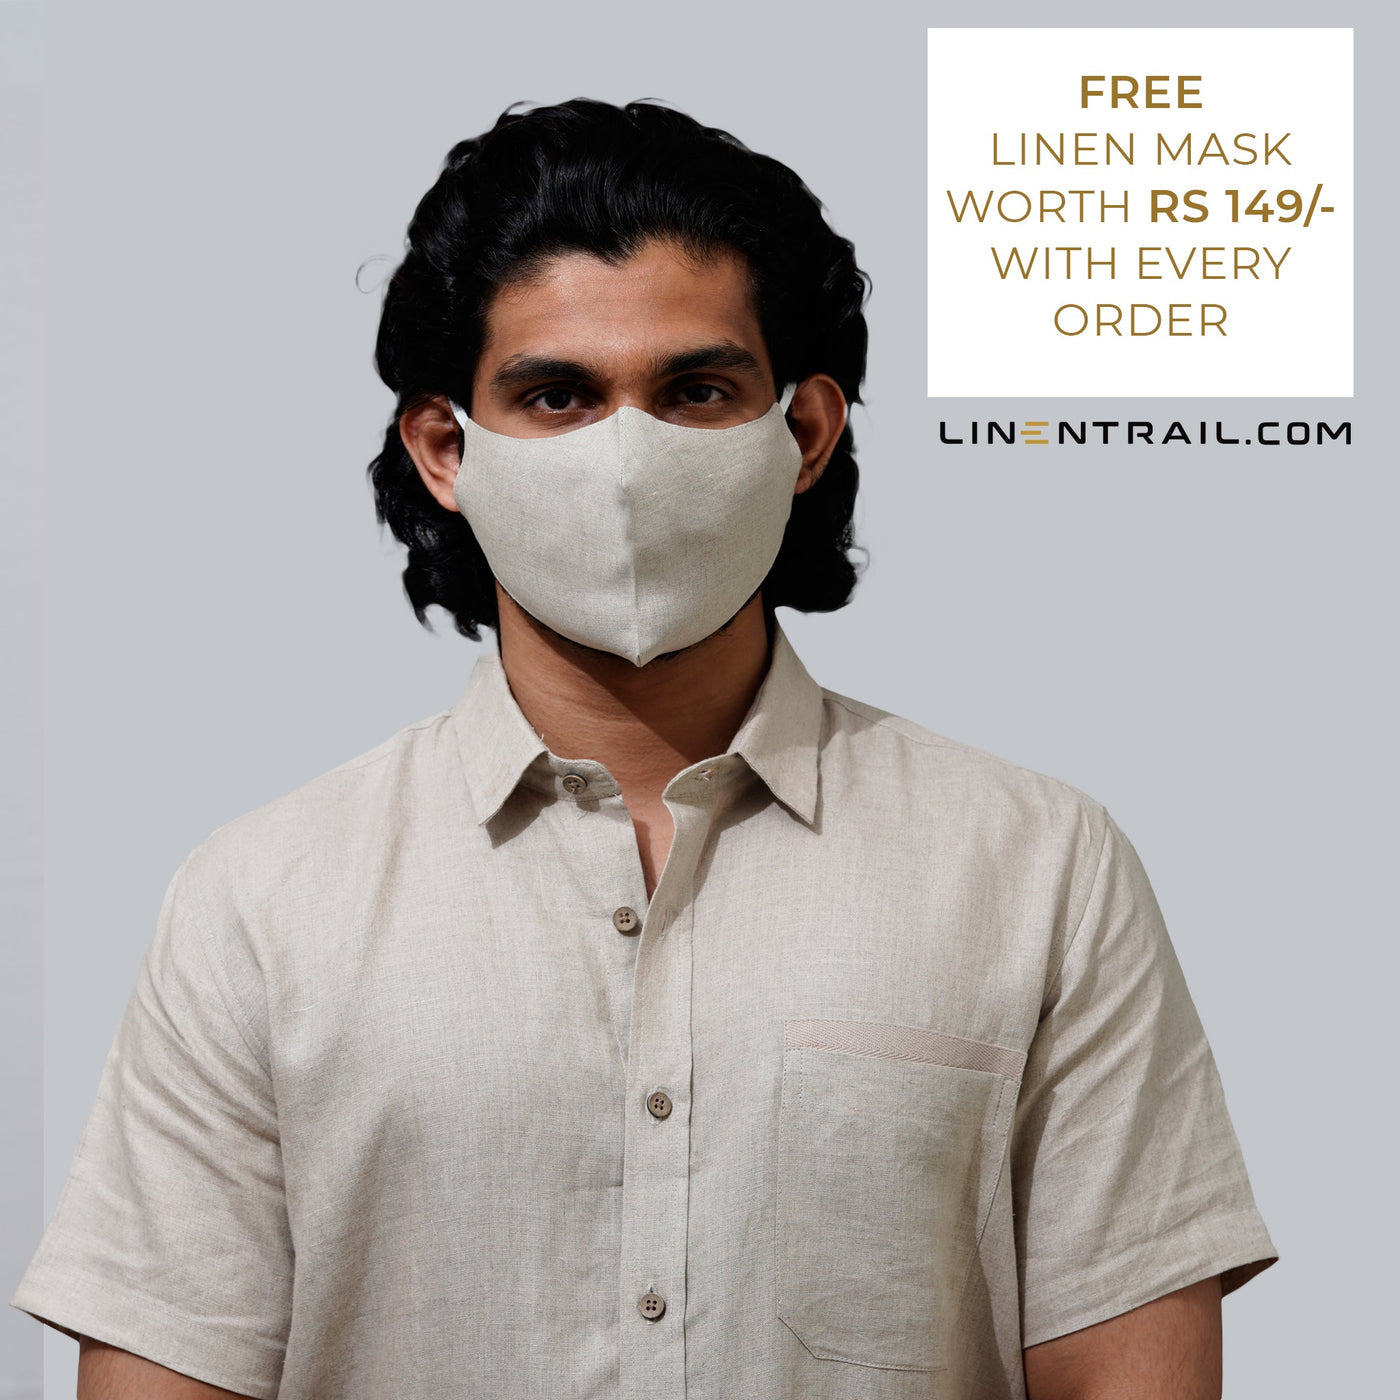 Free Linen Mask